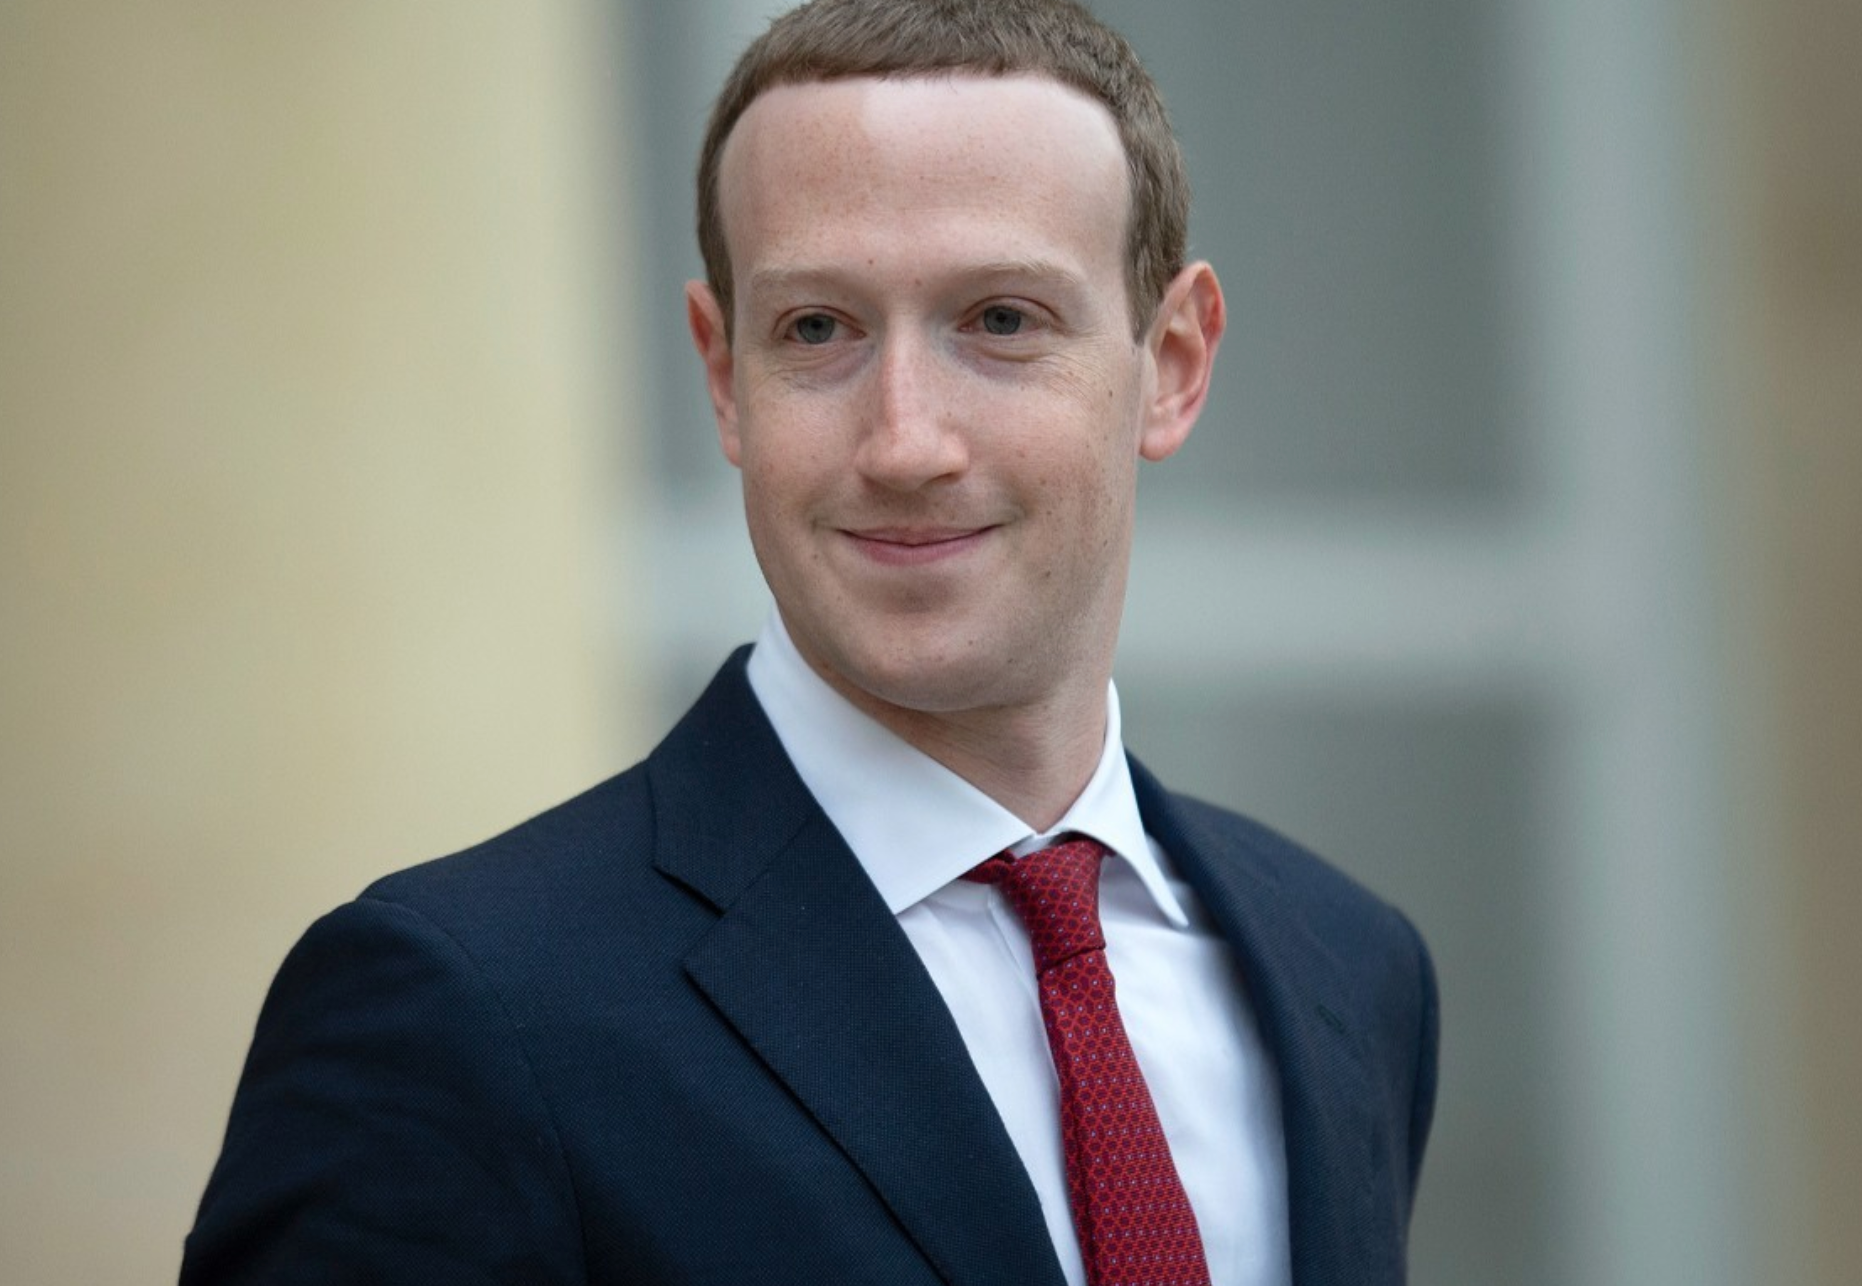 BBC to Produce Three-Part Docuseries on Mark Zuckerberg and Facebook